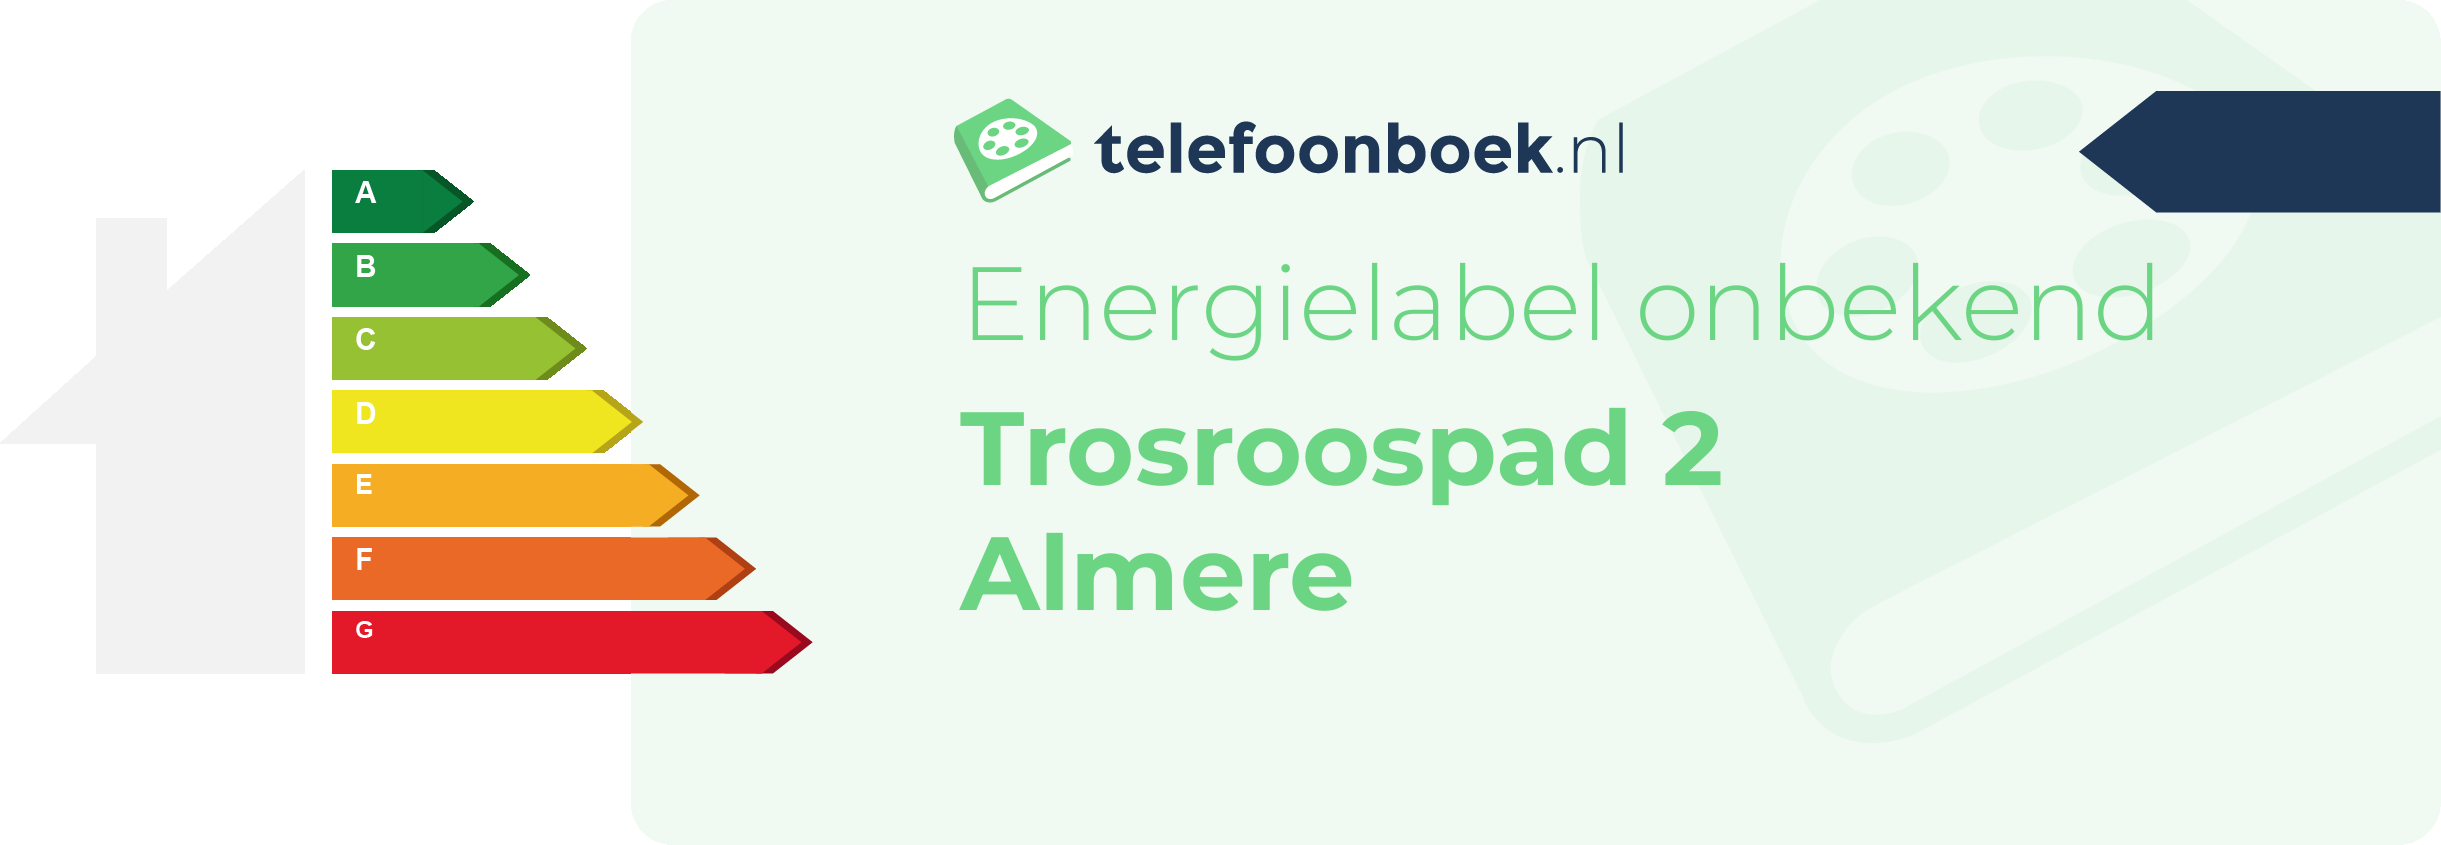 Energielabel Trosroospad 2 Almere